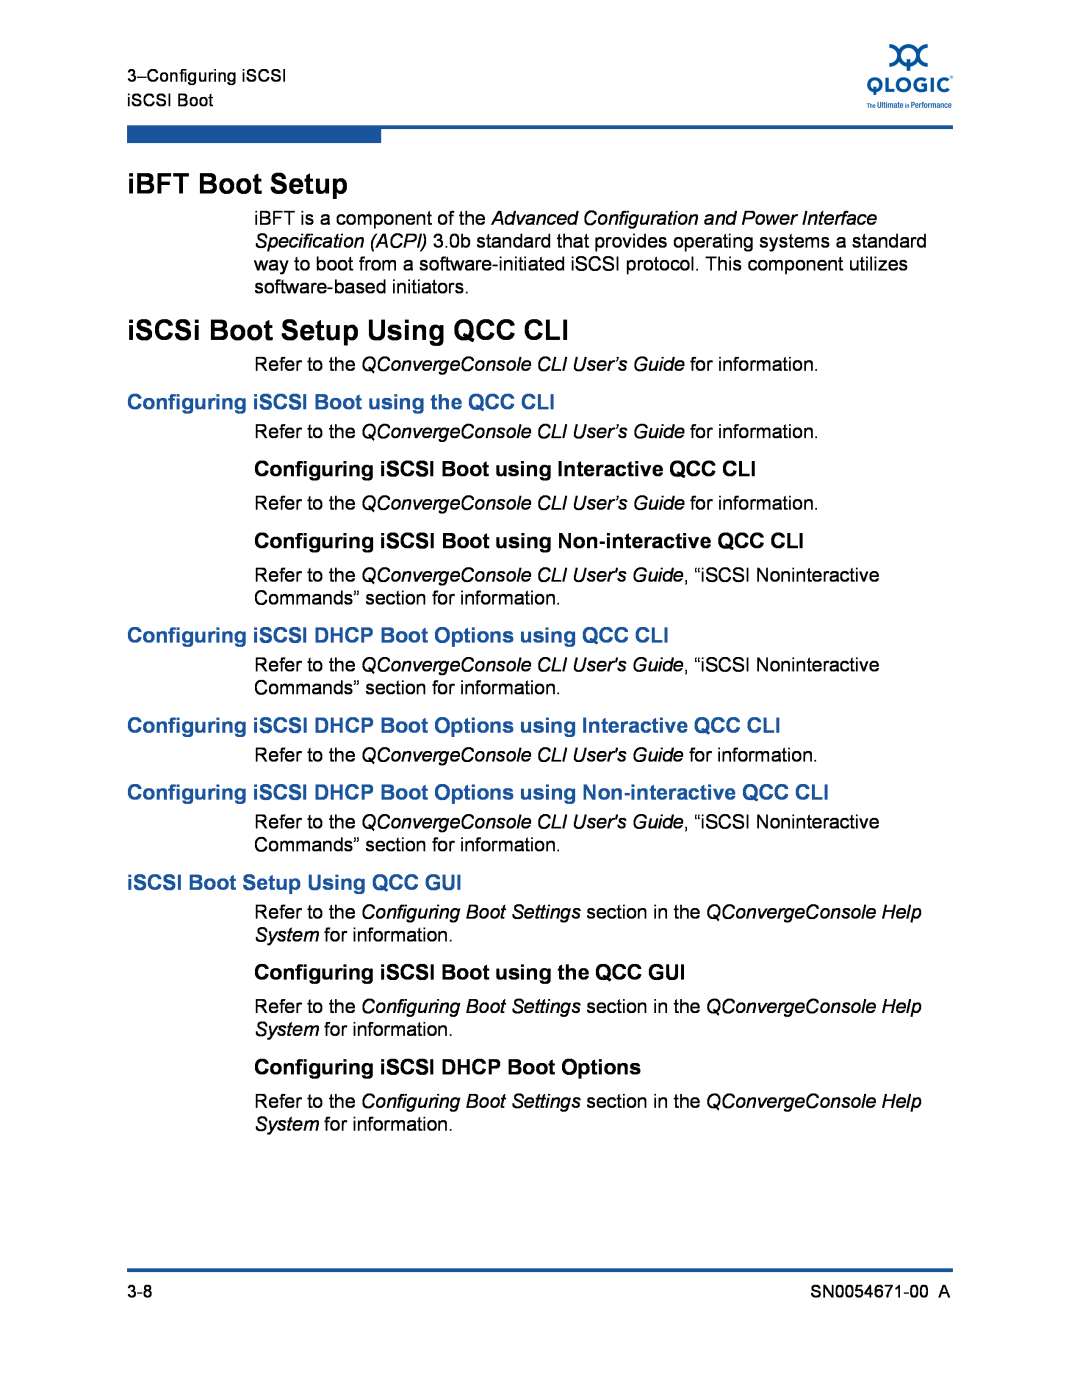 Q-Logic 8200, 3200 manual iBFT Boot Setup, iSCSi Boot Setup Using QCC CLI, Configuring iSCSI Boot using the QCC CLI 